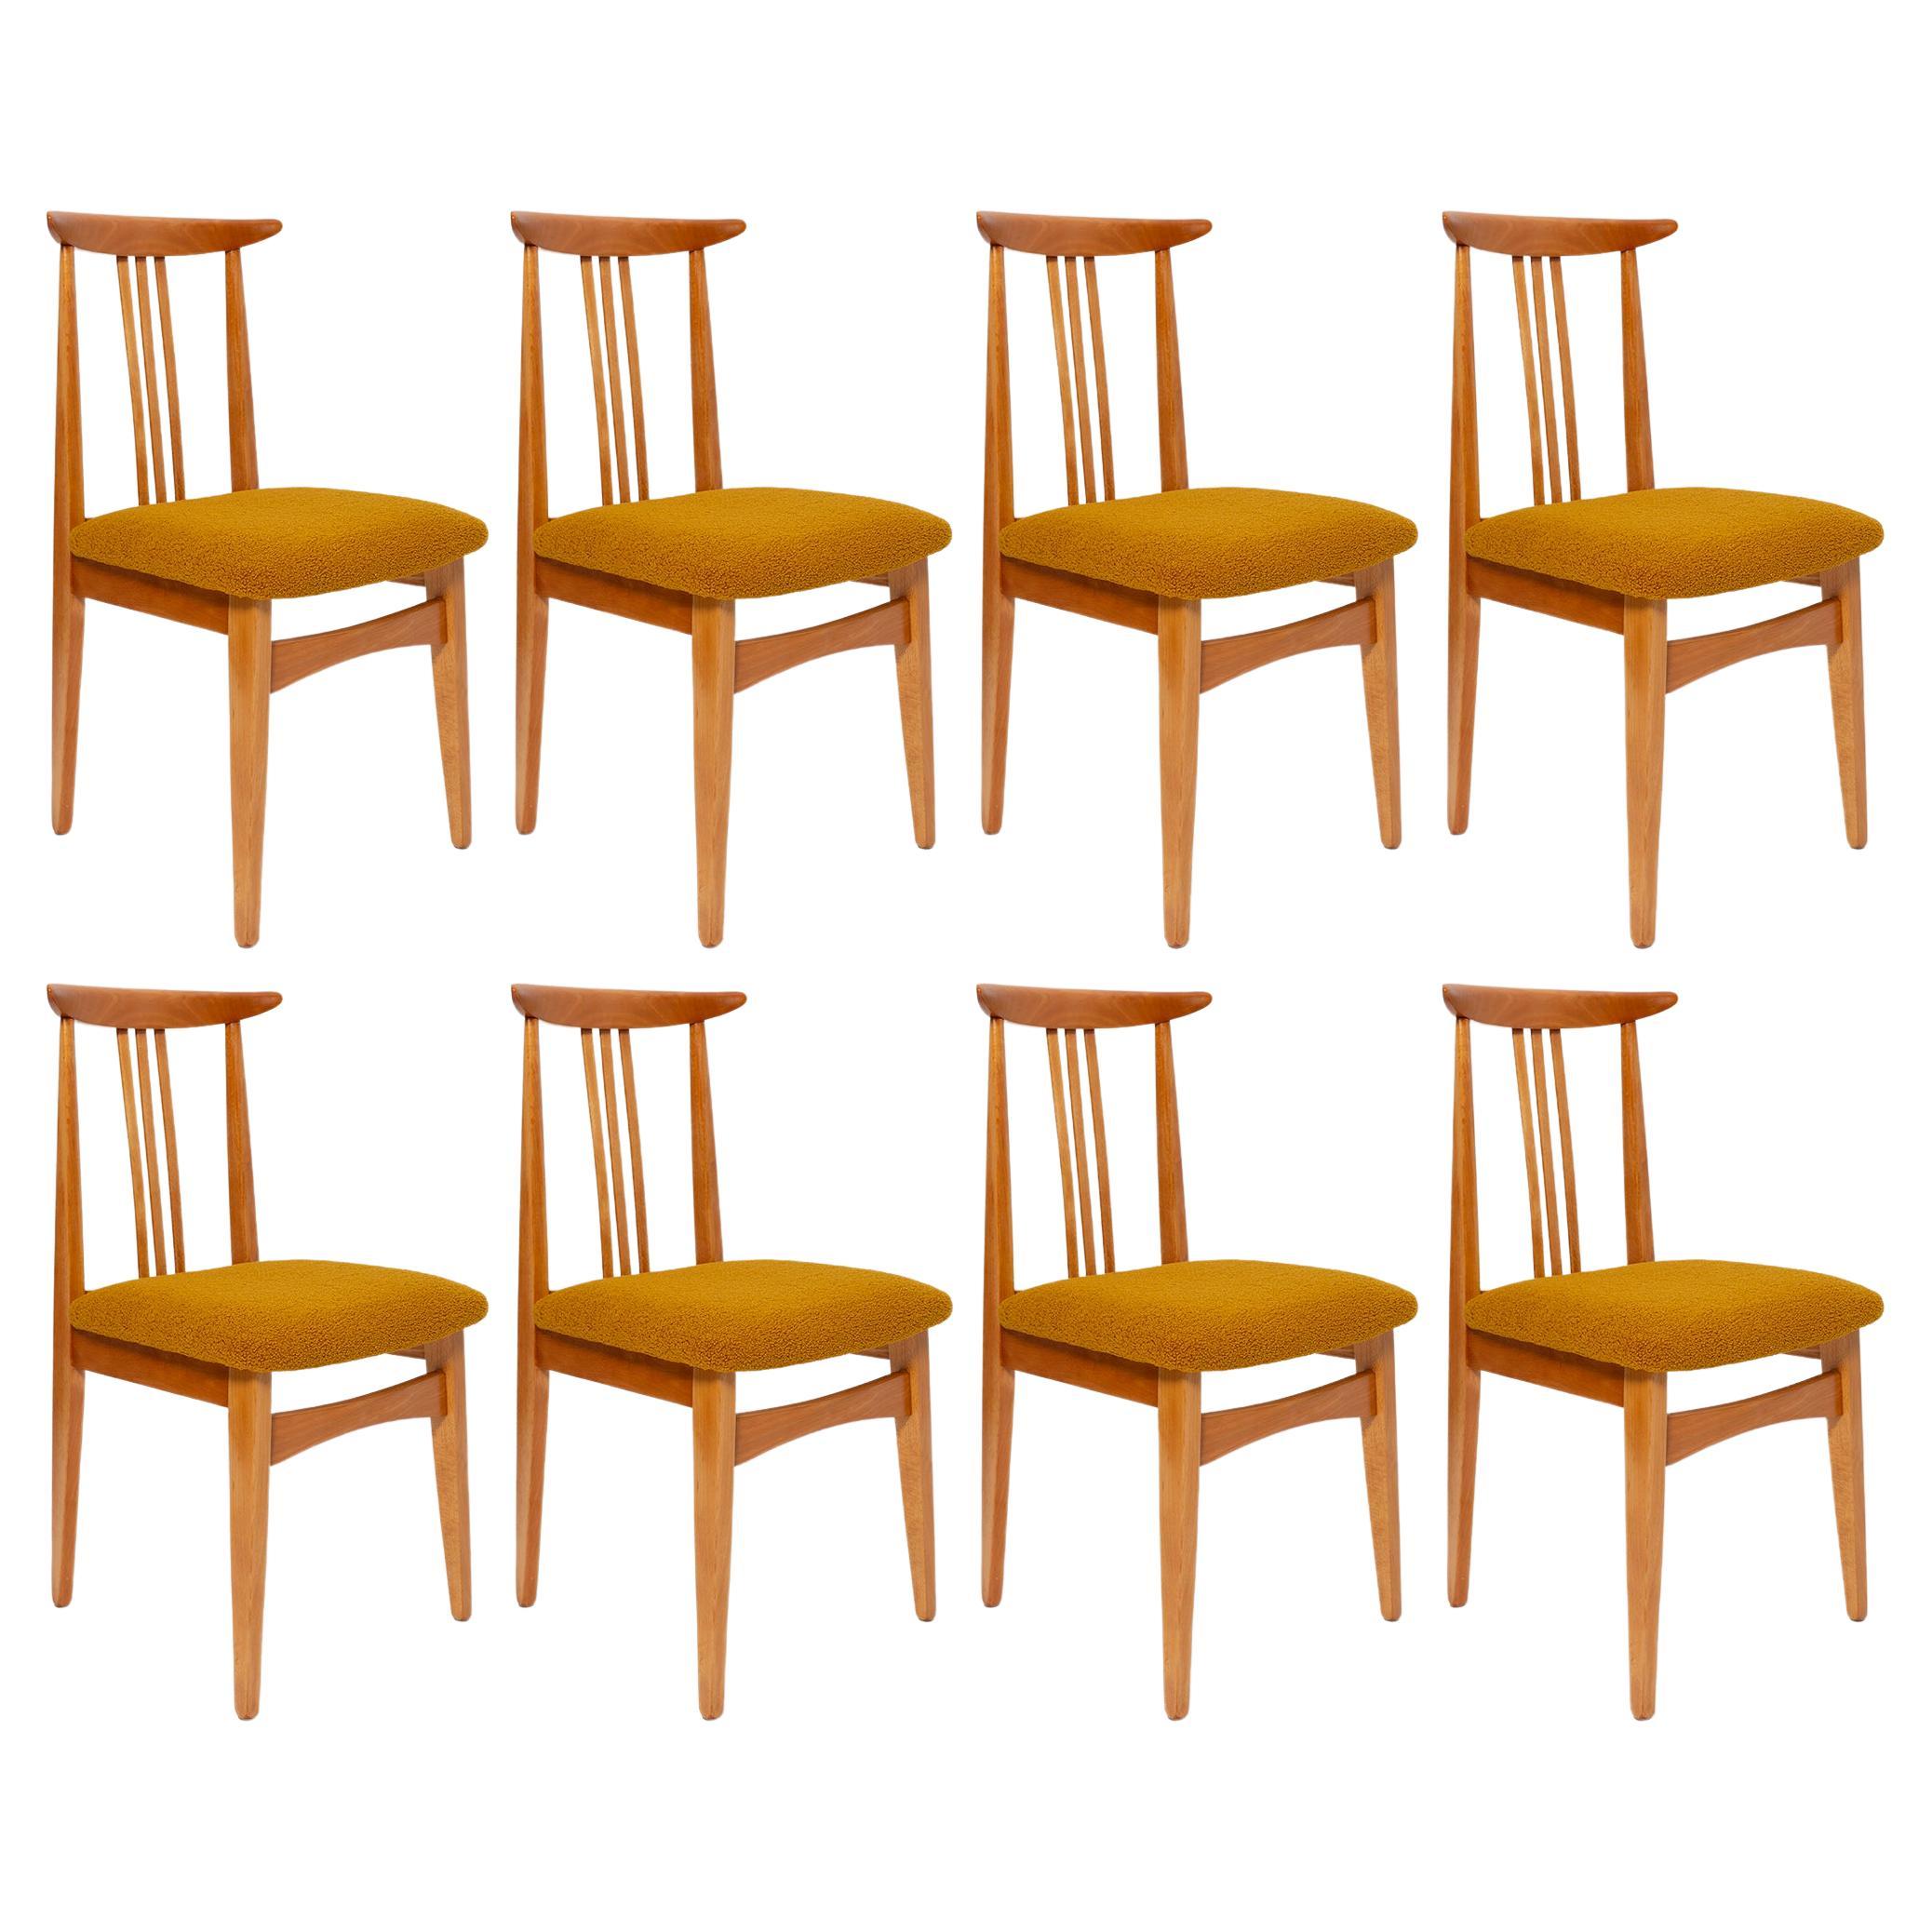 Eight Mid-Century Ochre Boucle Chairs, Light Wood, M. Zielinski, Europe, 1960s For Sale